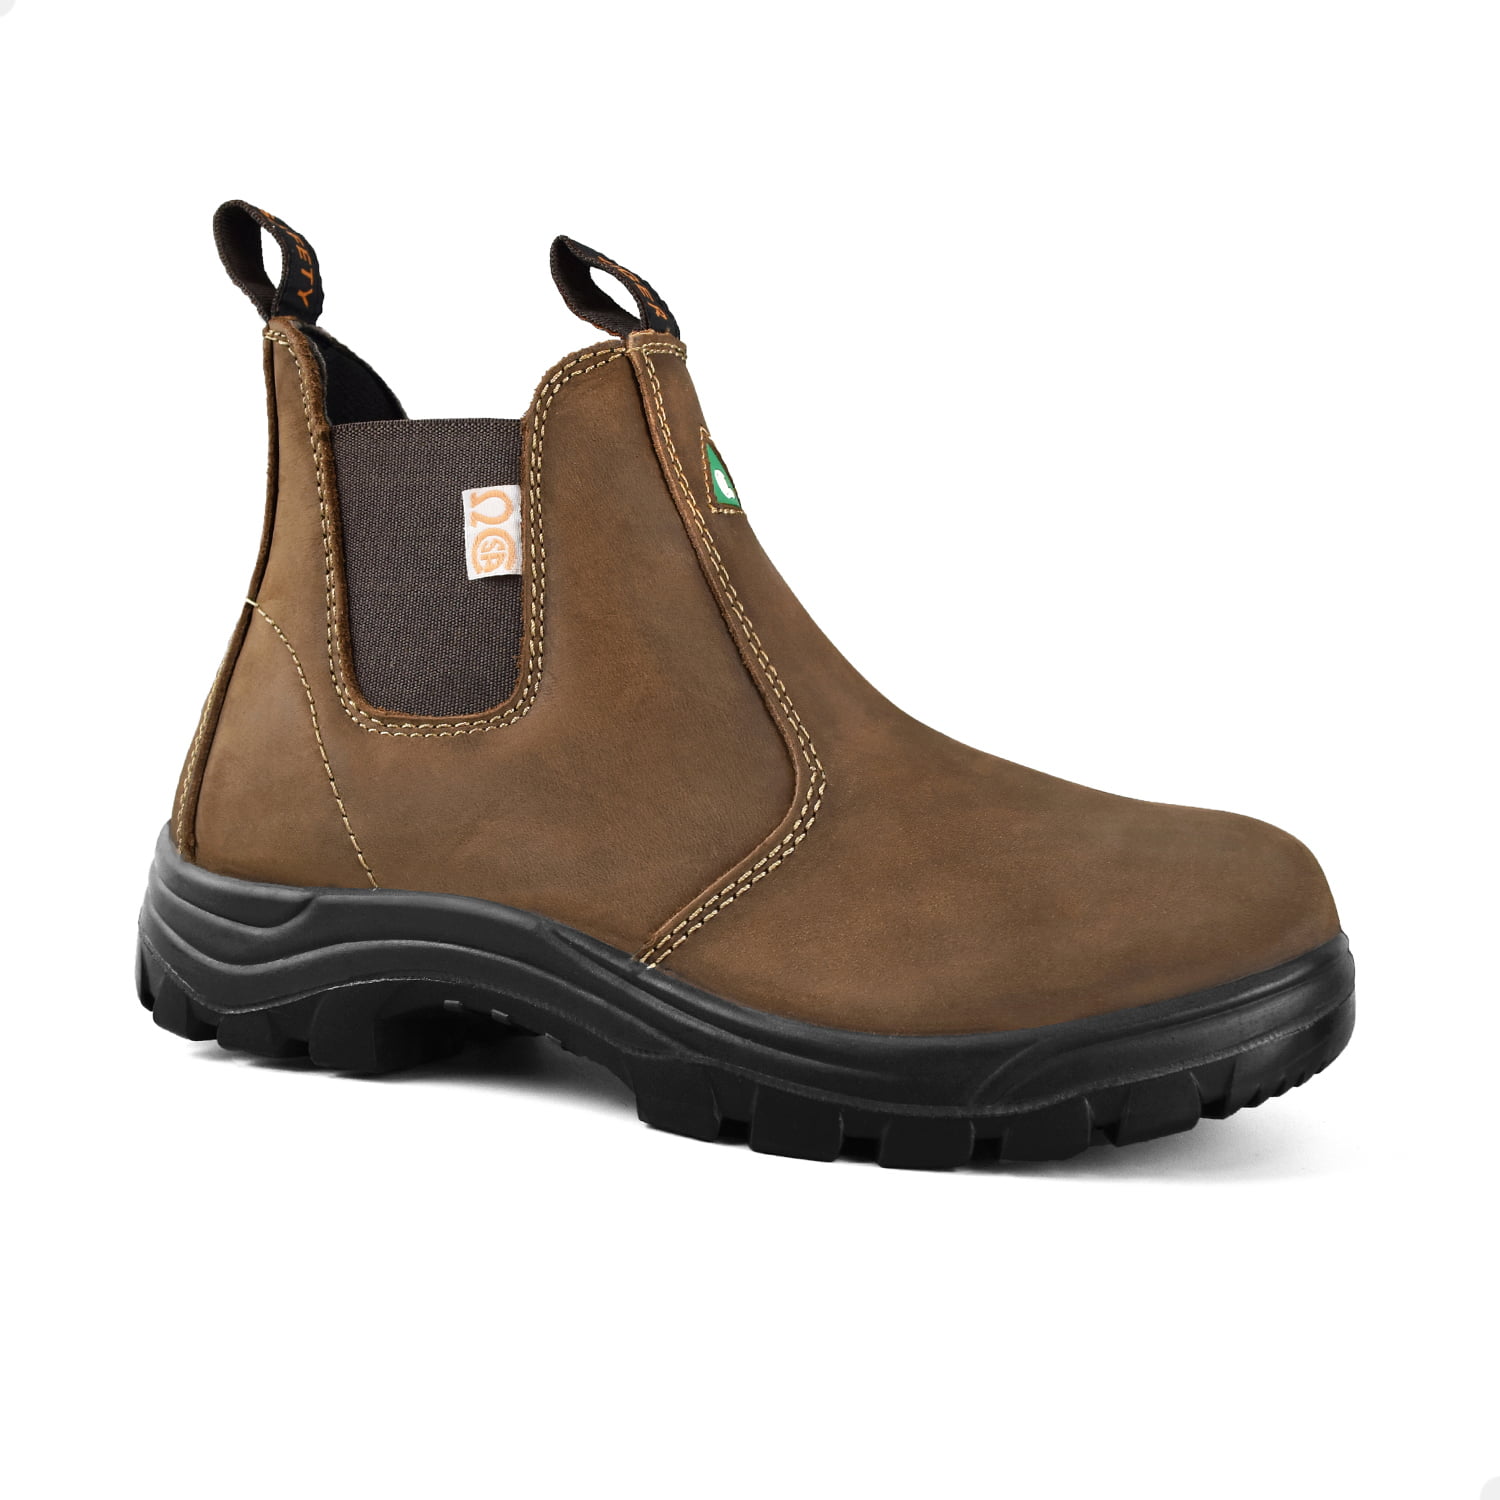 lightweight safety toe work boots